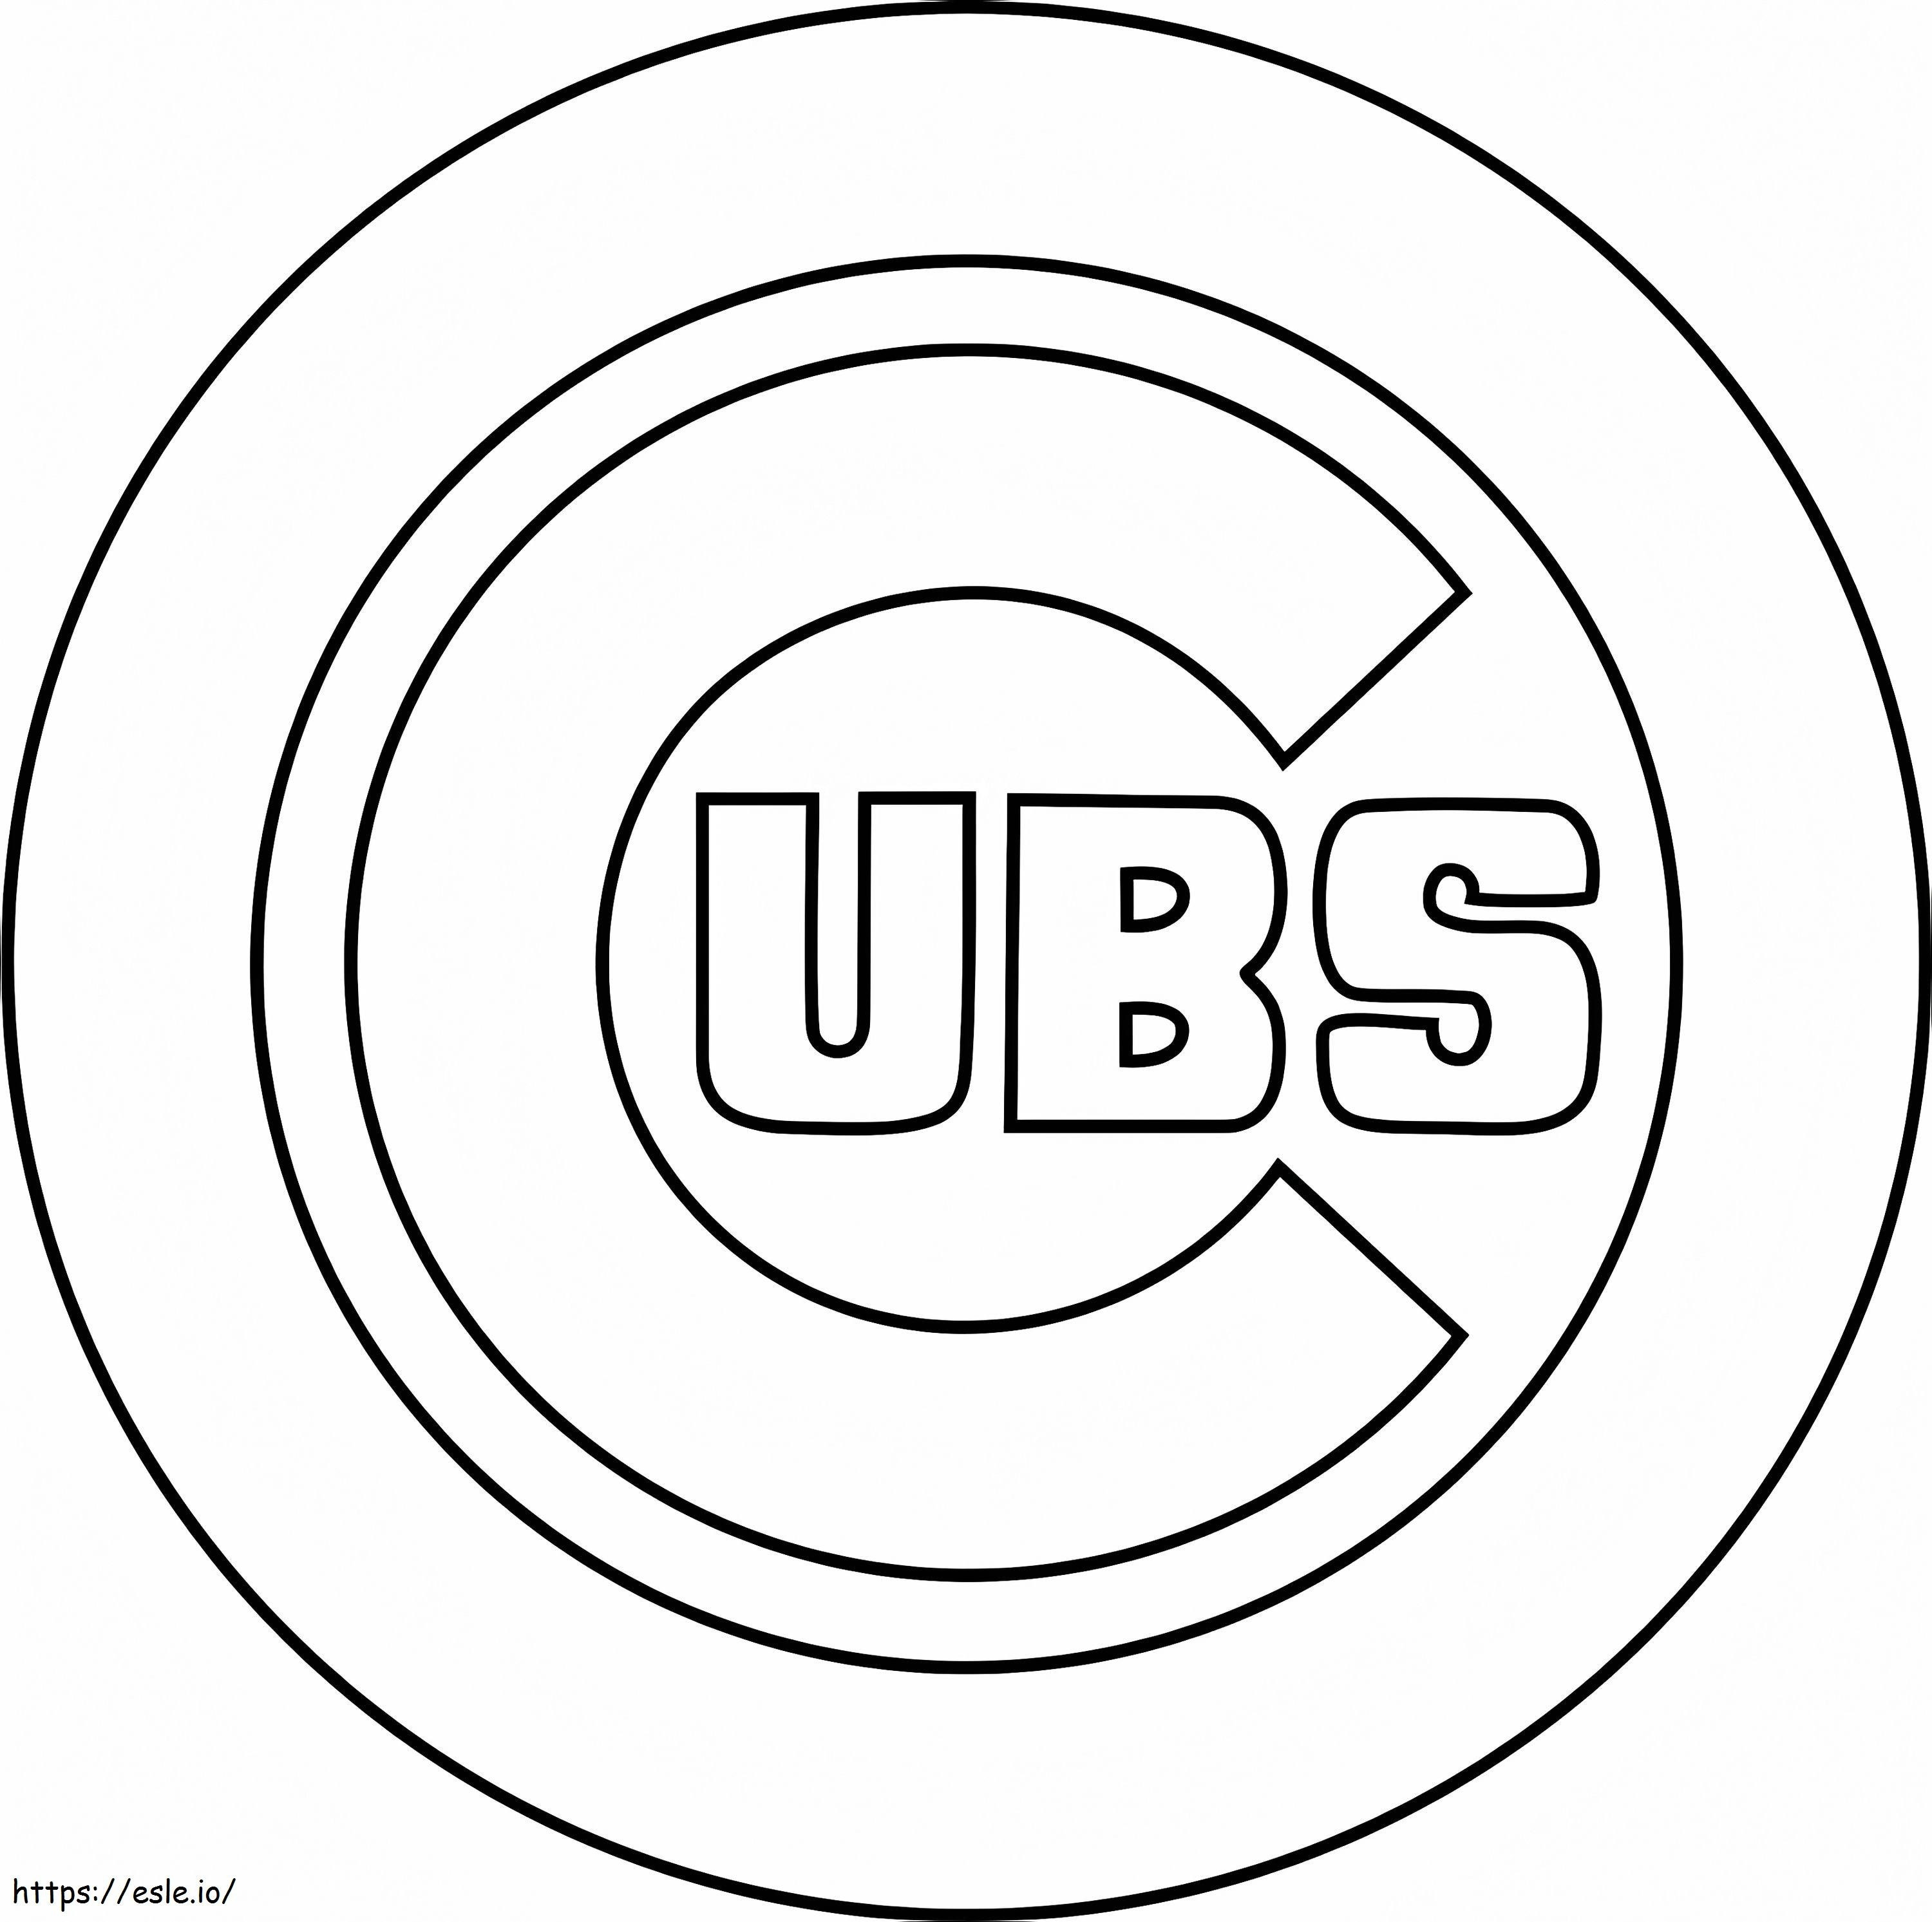 Chicago Cubs-Logo ausmalbilder